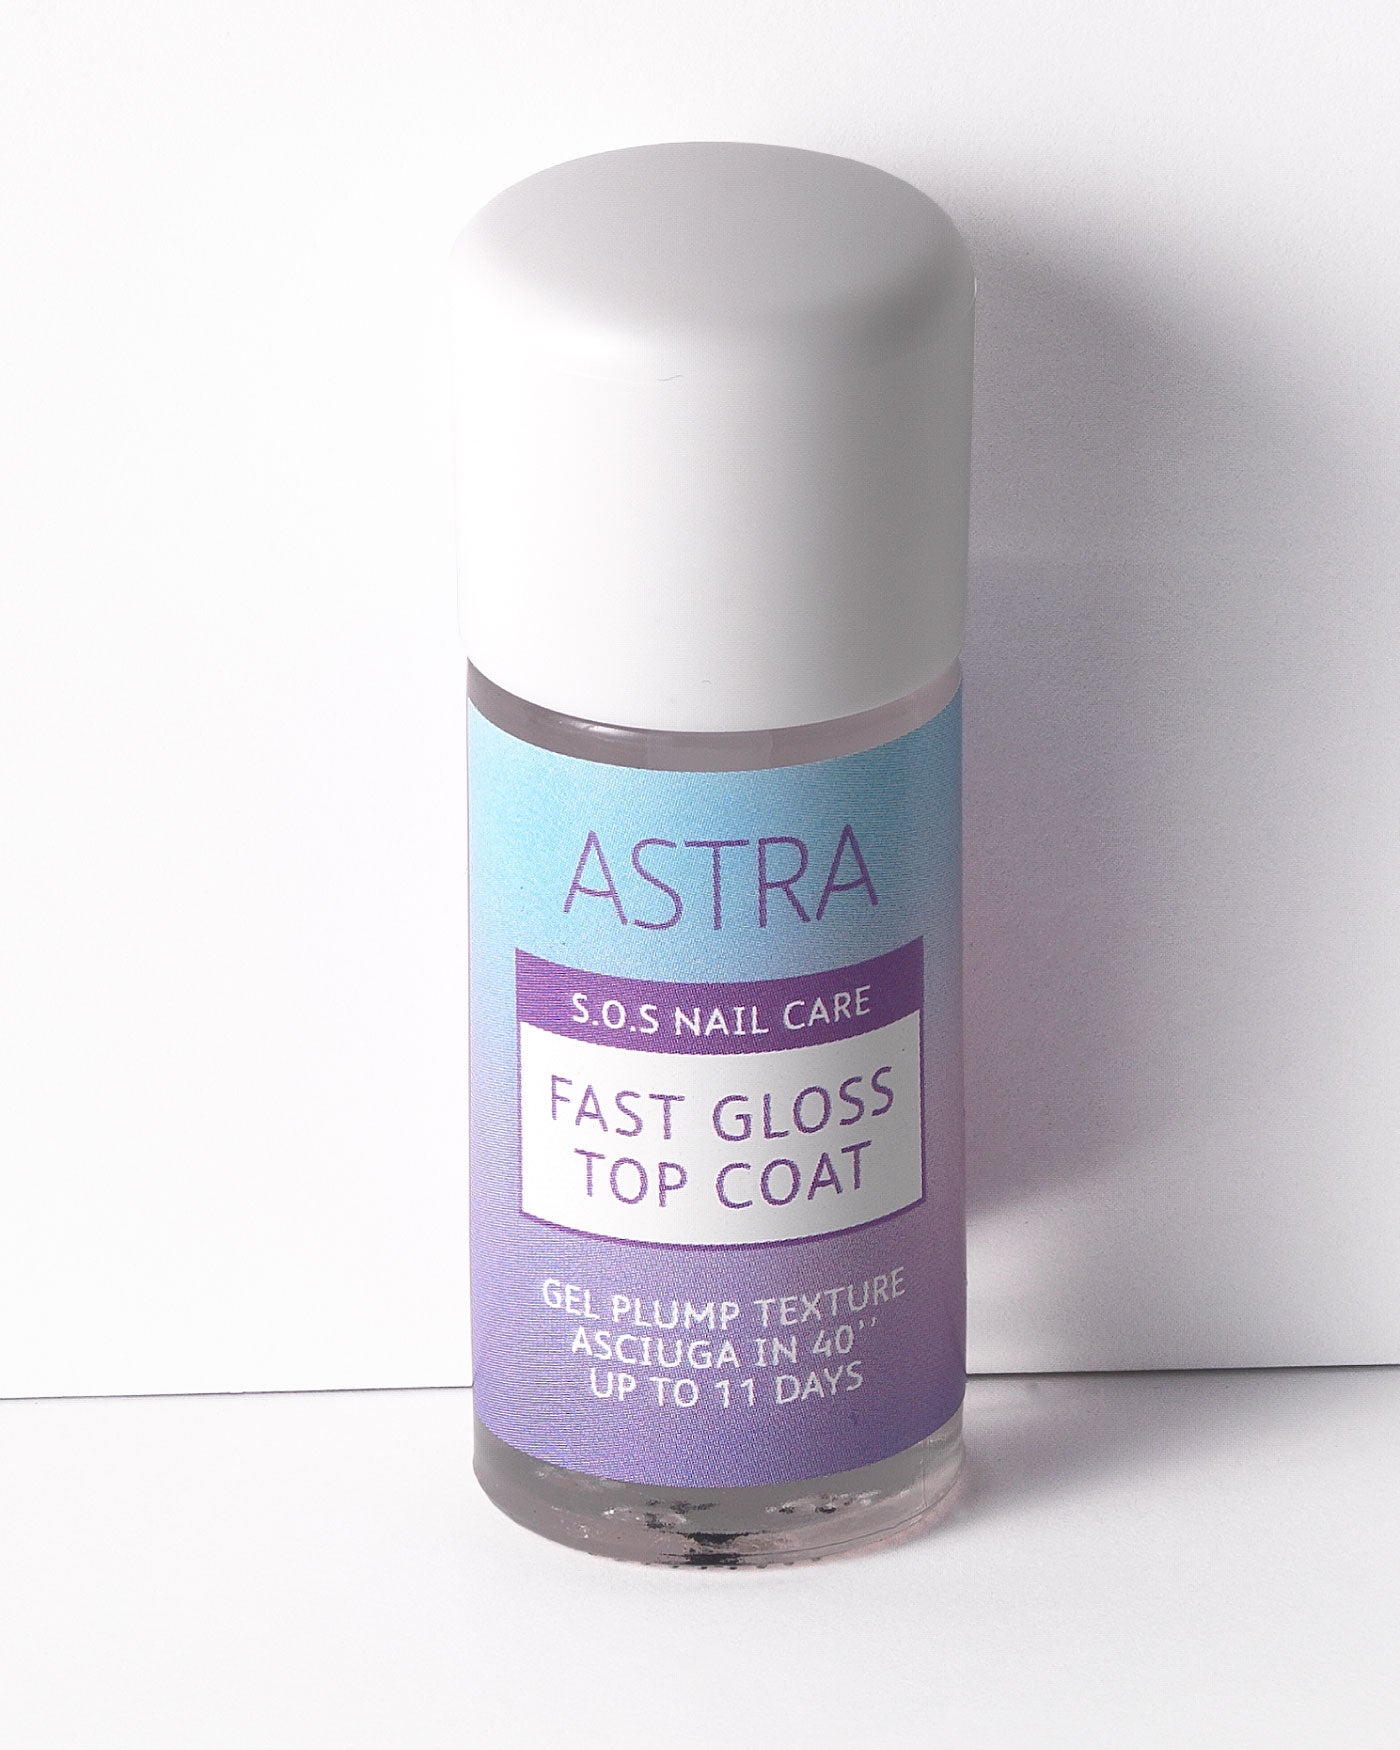 S.O.S NAIL CARE -  FAST GLOSS TOP COAT - Promozioni - Astra Make-Up